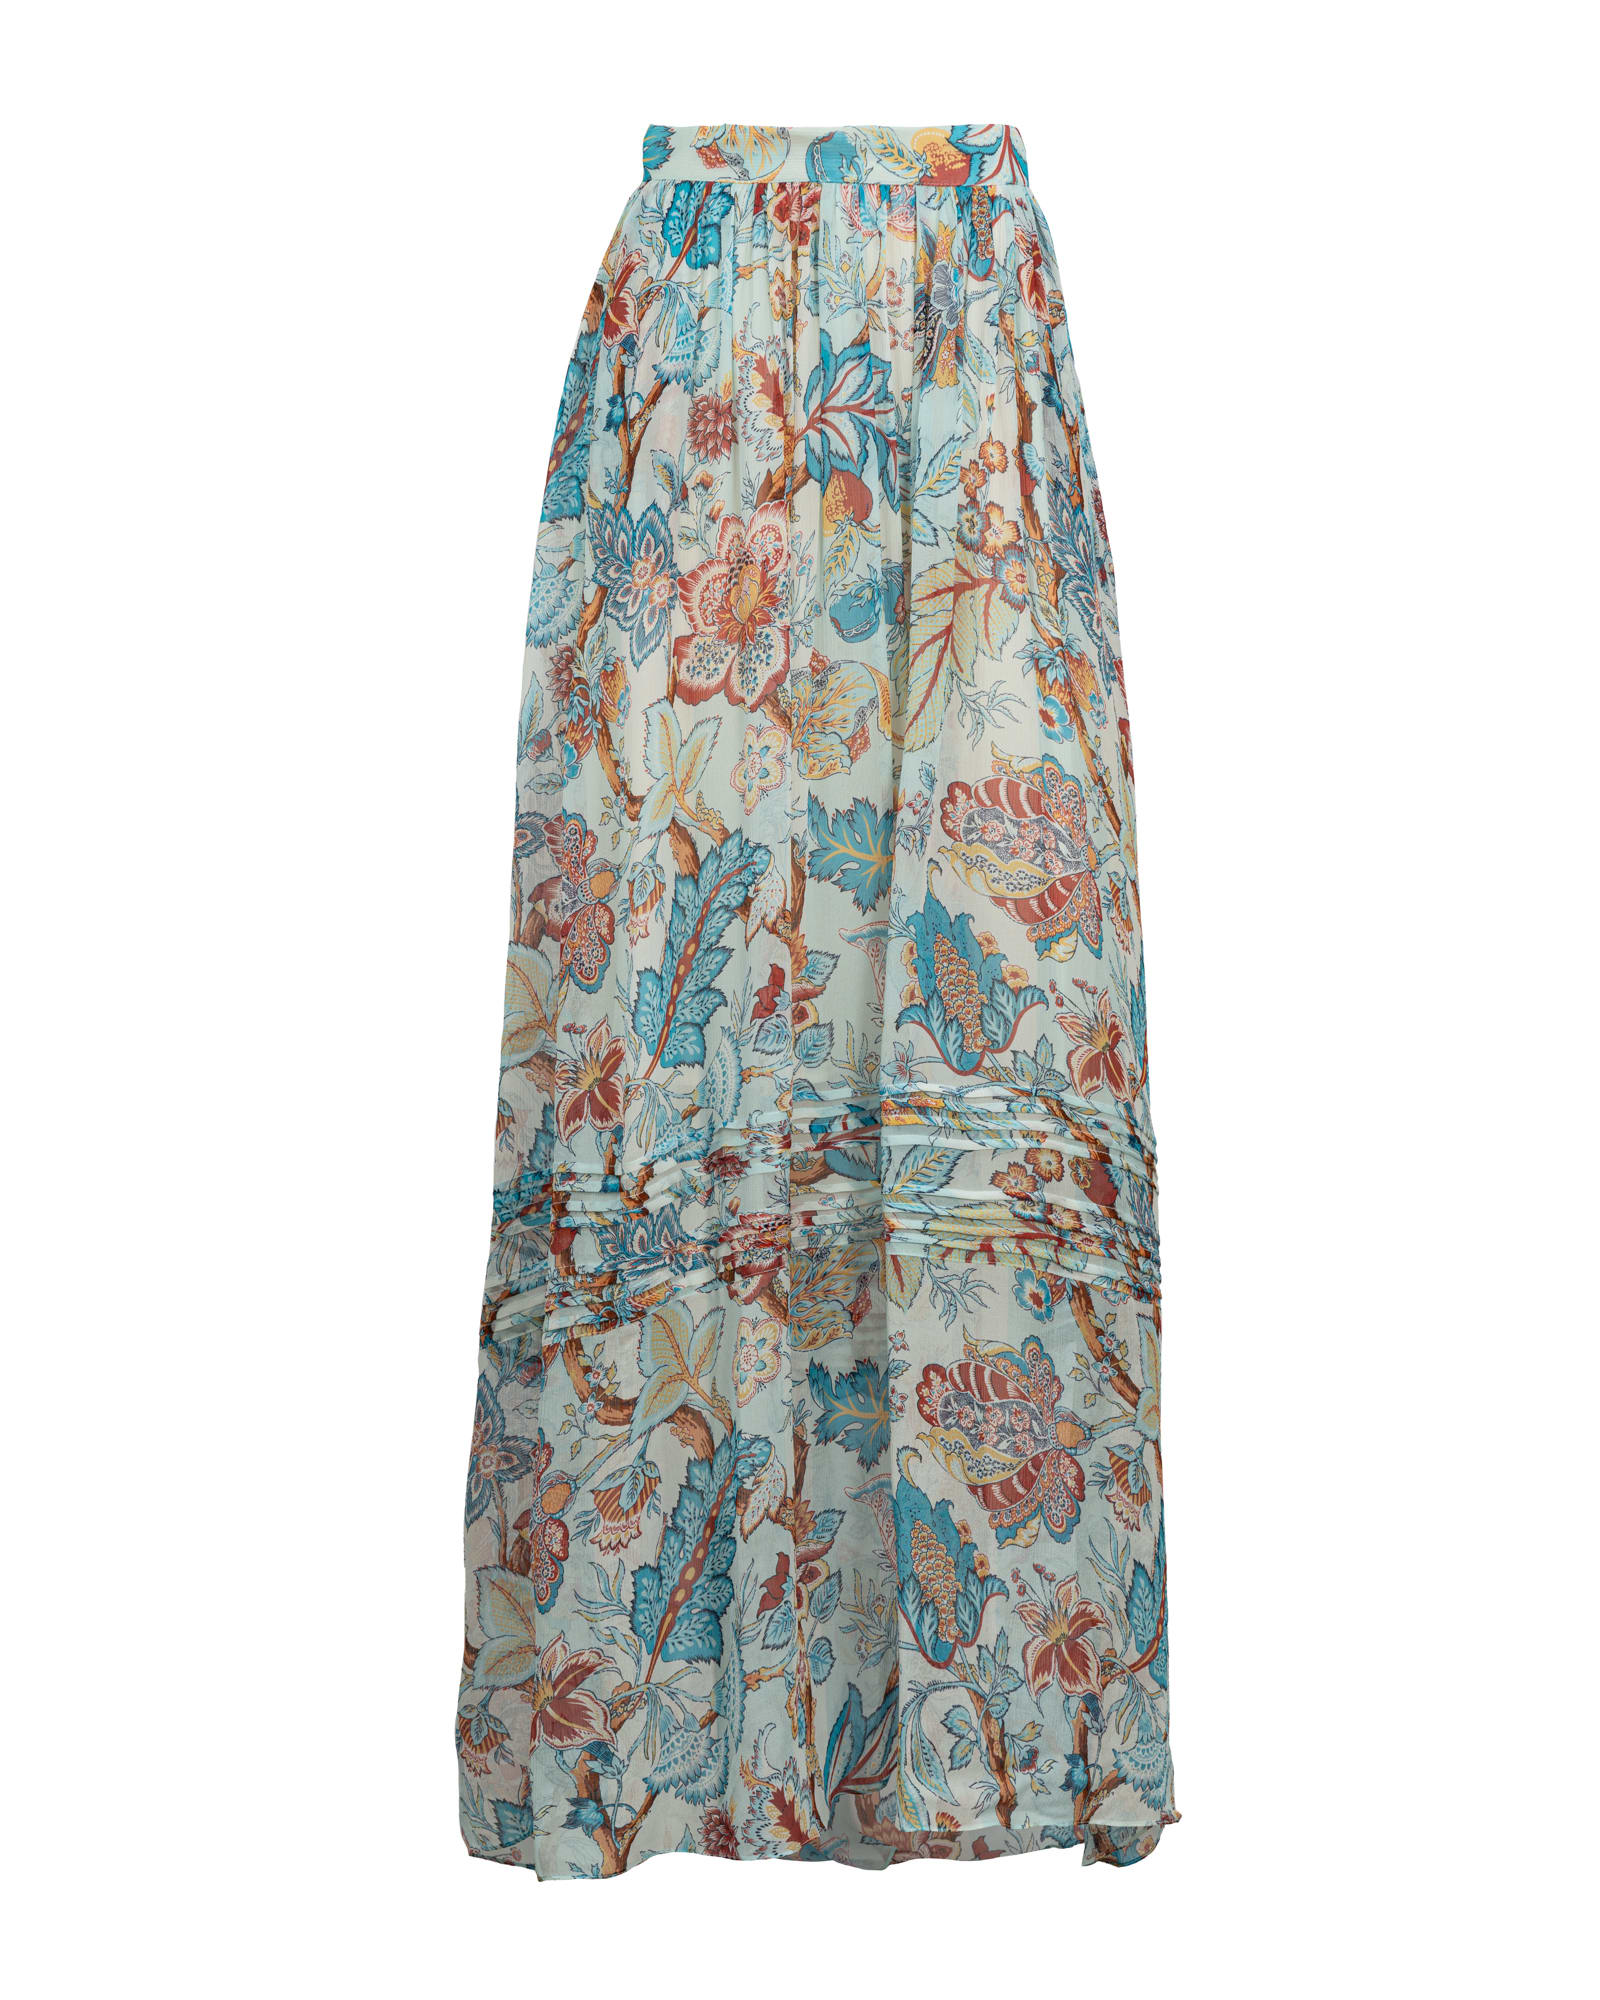 Etro floral print silk skirt